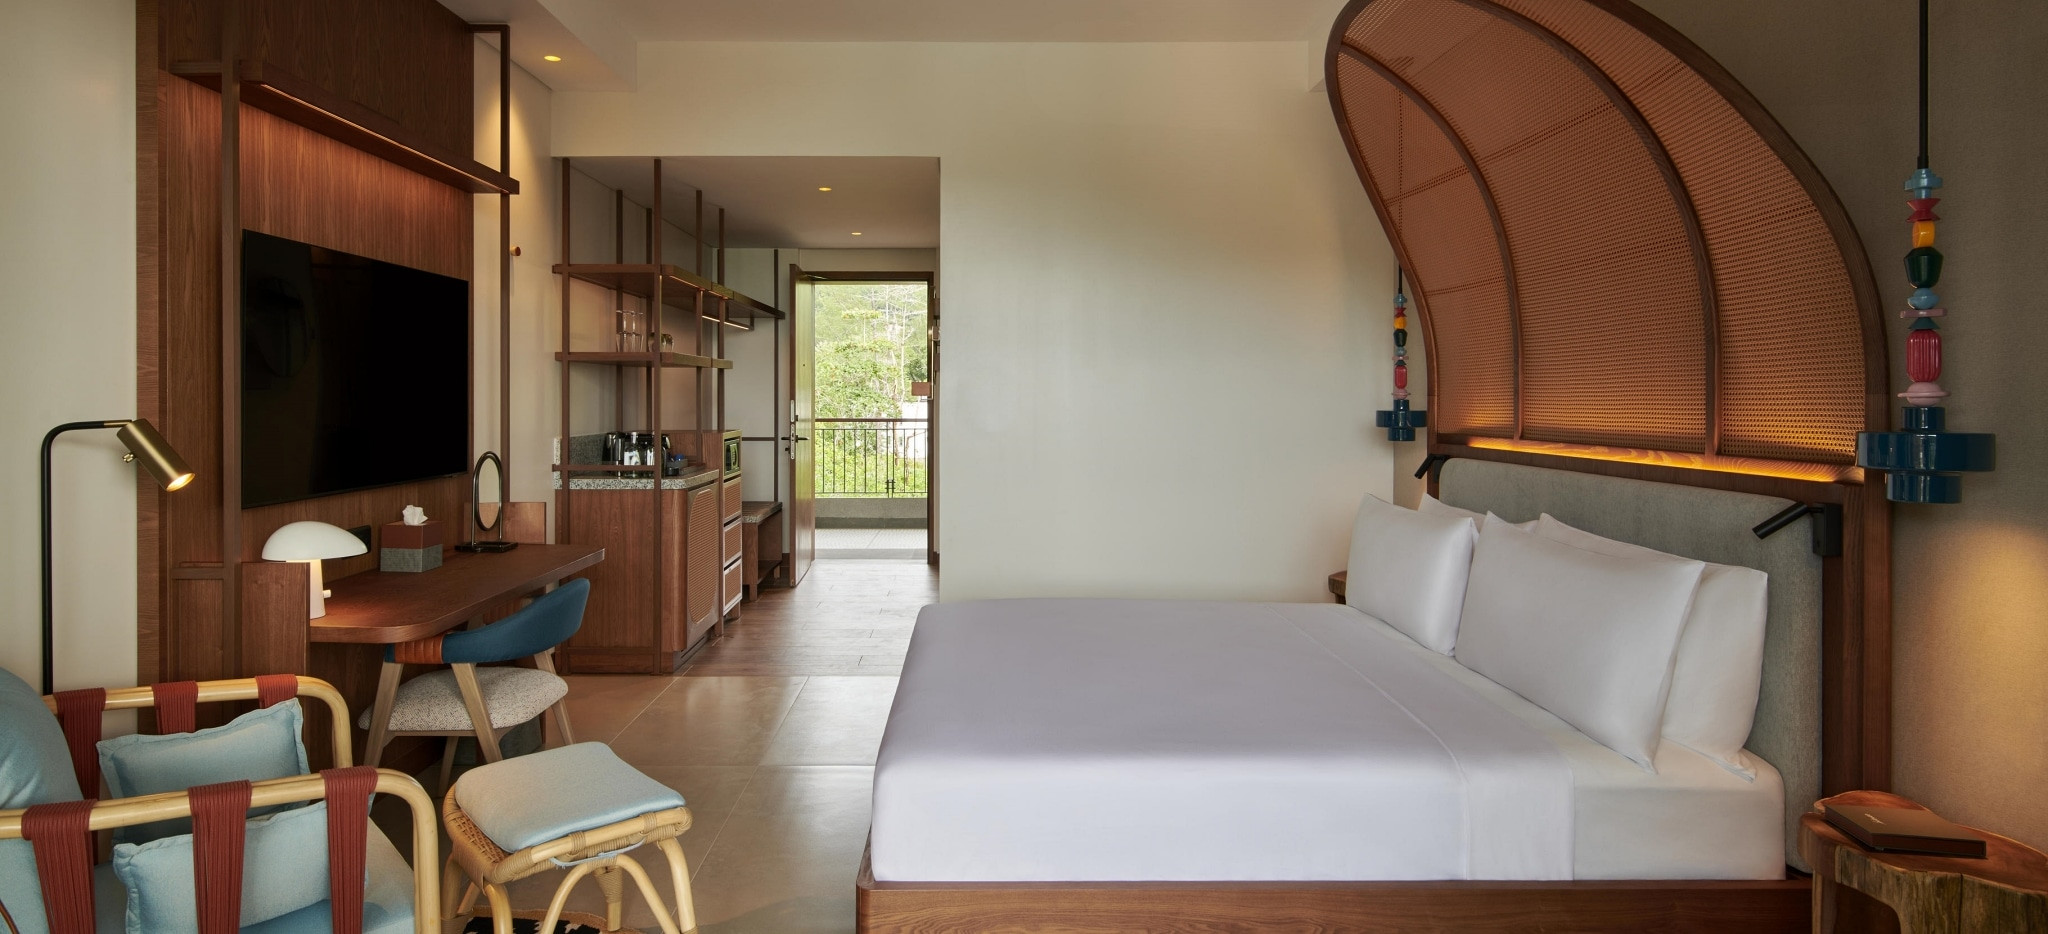 Ein Hotelzimmer der Kategorie King Deluxe Room im Hotel Canopy by Hilton Seychelles